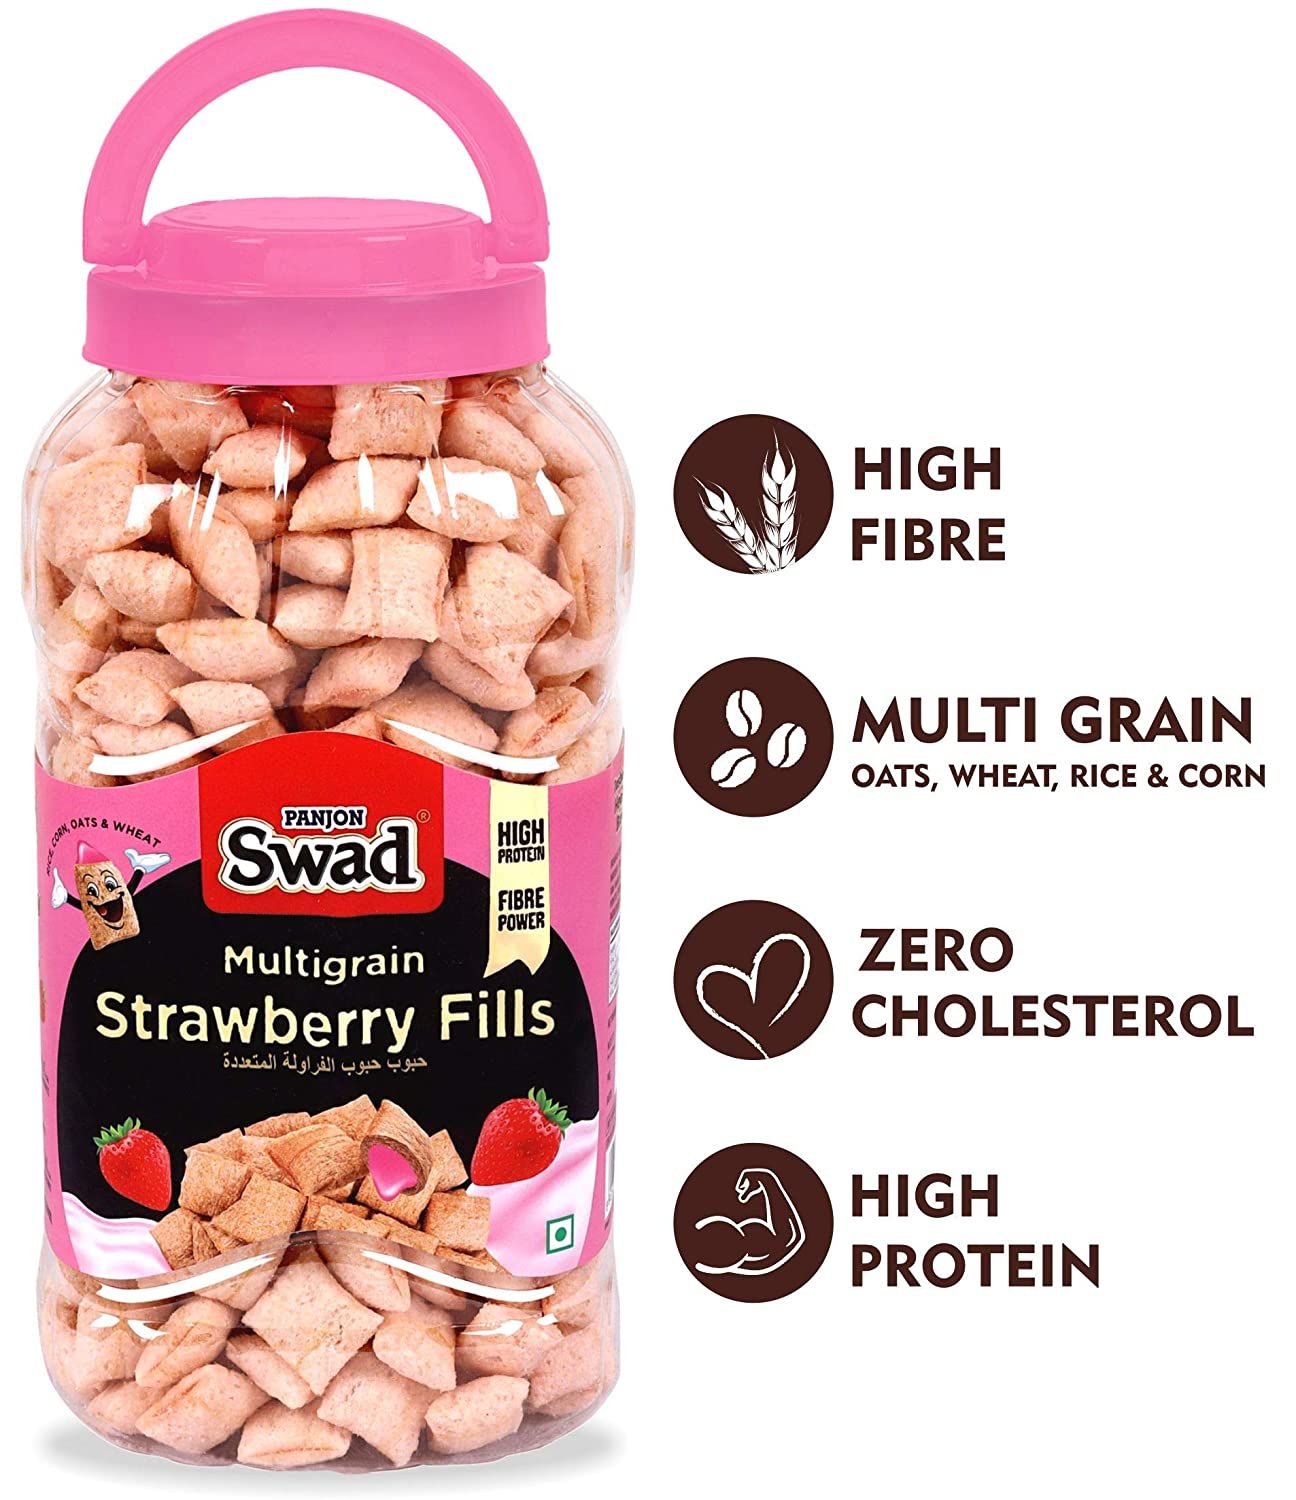 Swad Multigrain Strawberry Fills Image